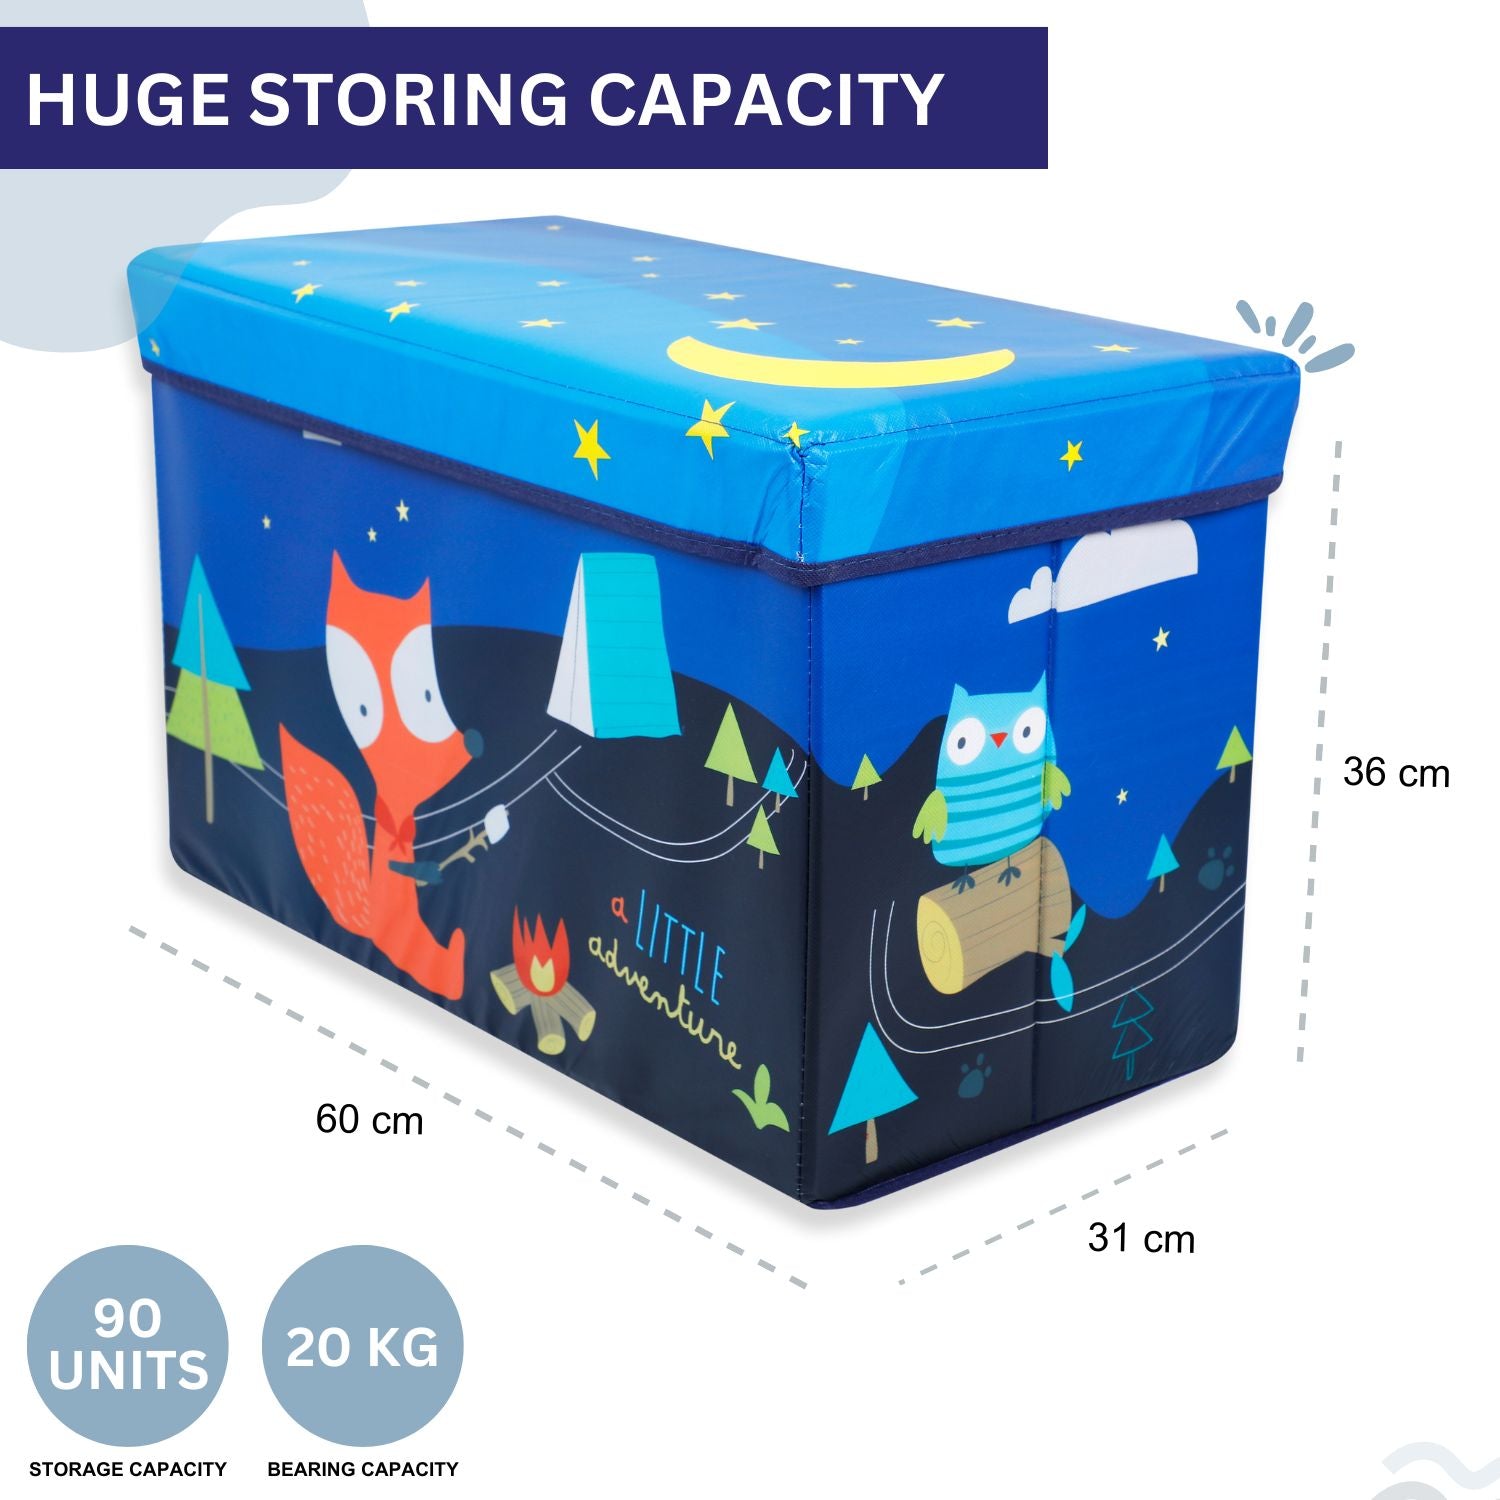 Baby Moo Little Adventure Large Multifunctional Playroom Storage Box - Navy Blue